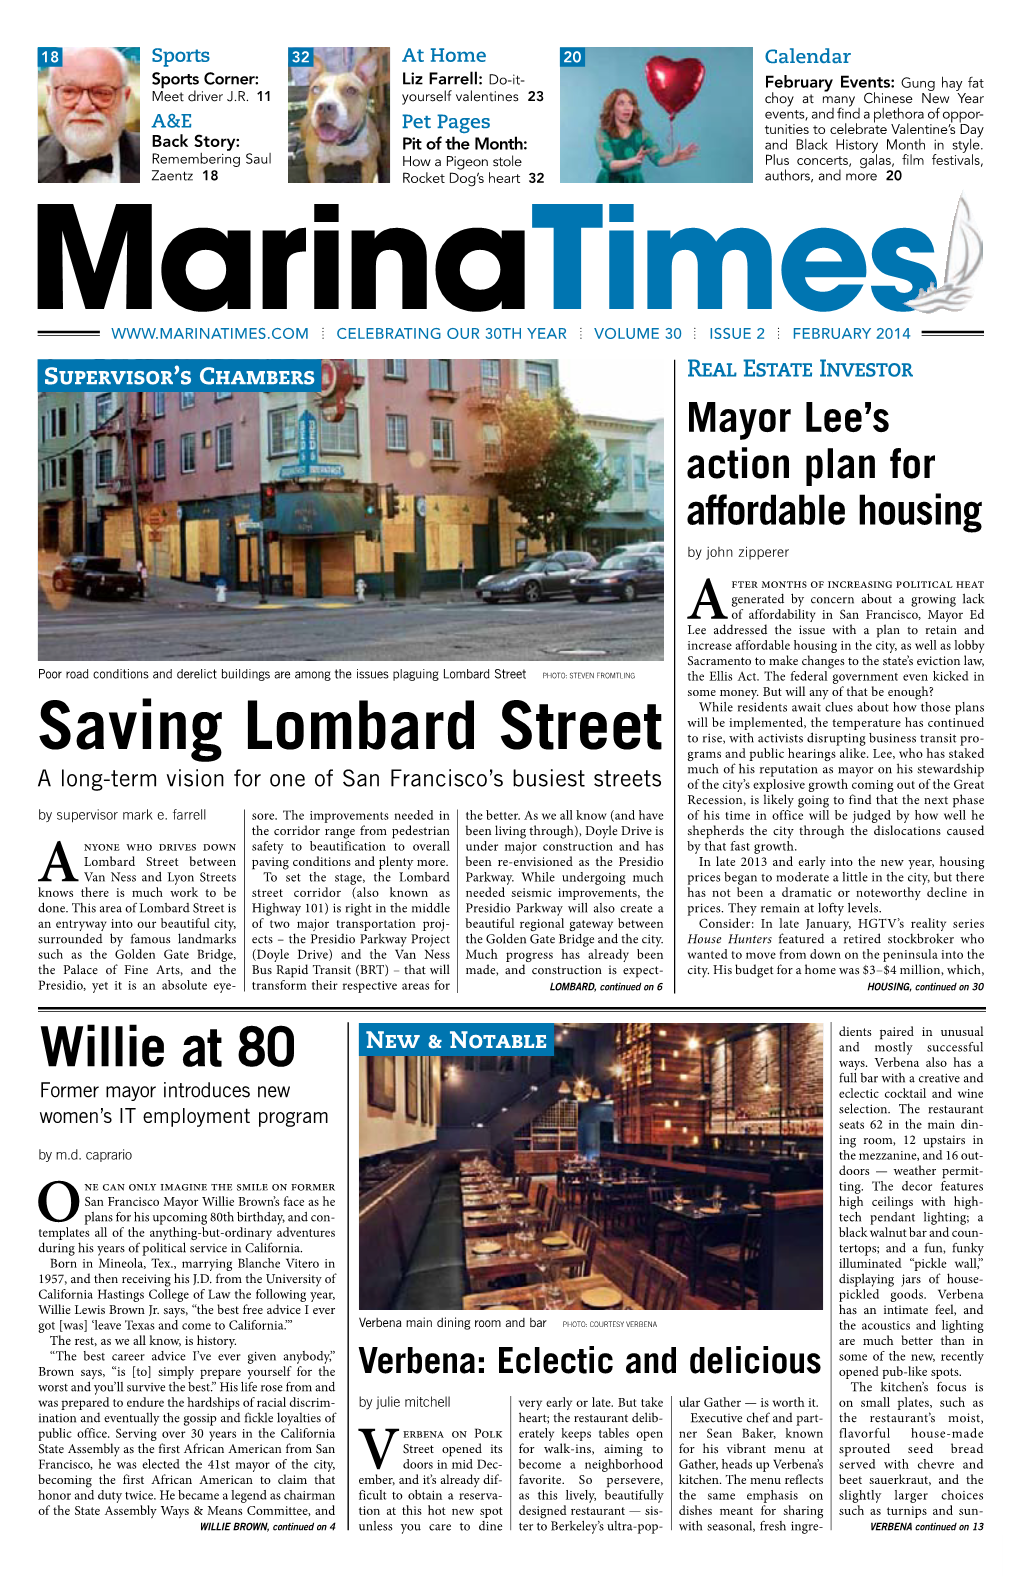 Saving Lombard Street Grams and Public Hearings Alike